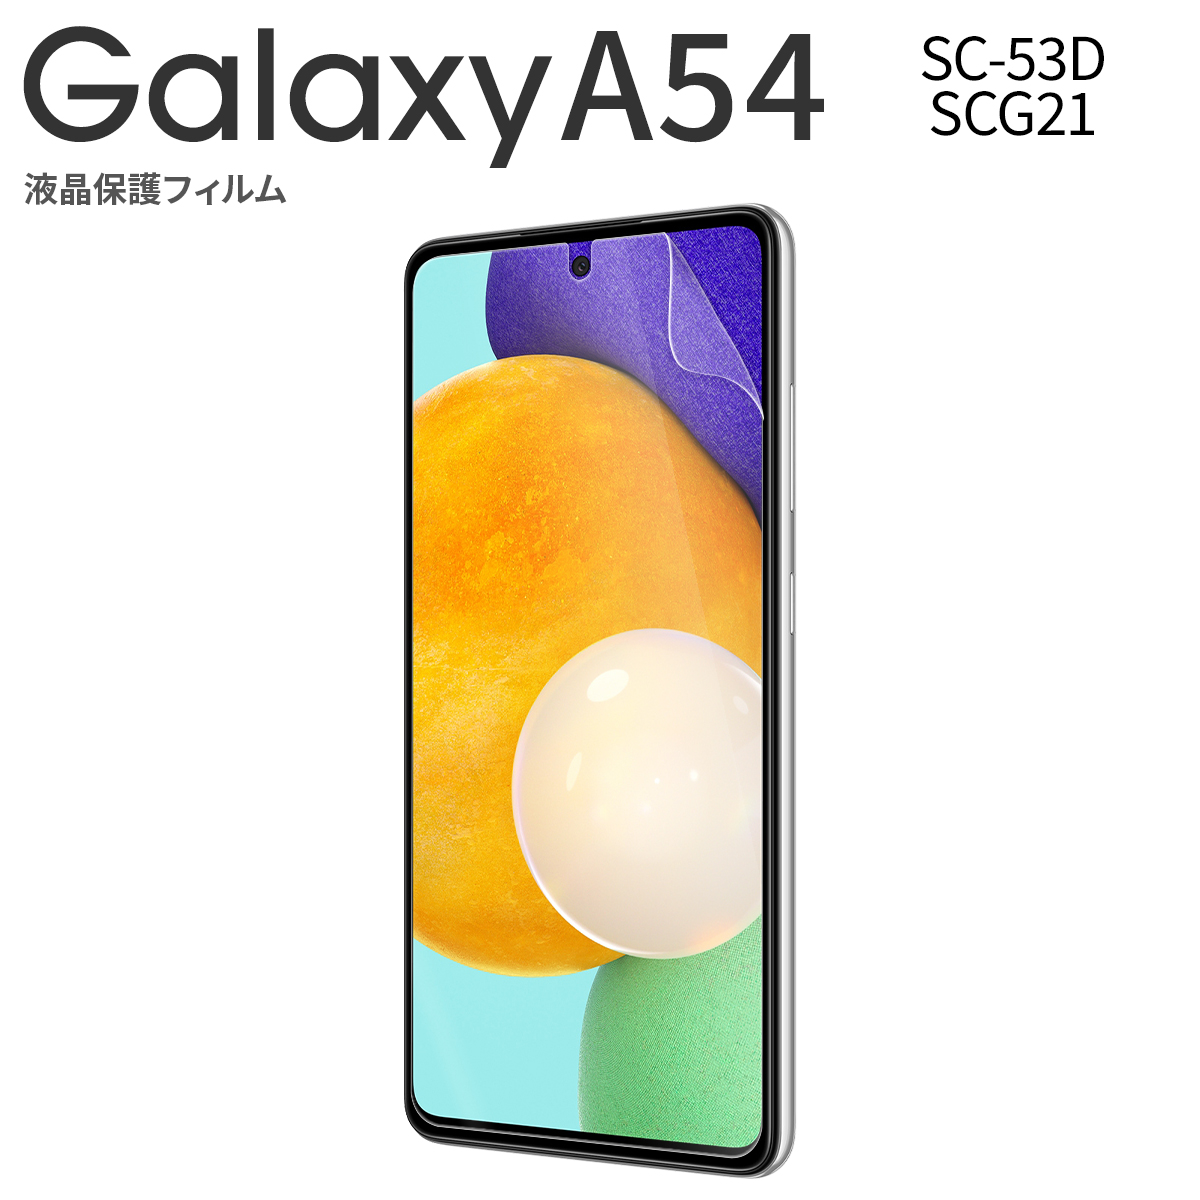 Galaxy A54 SC-53D SCG21 液晶保護フィルム